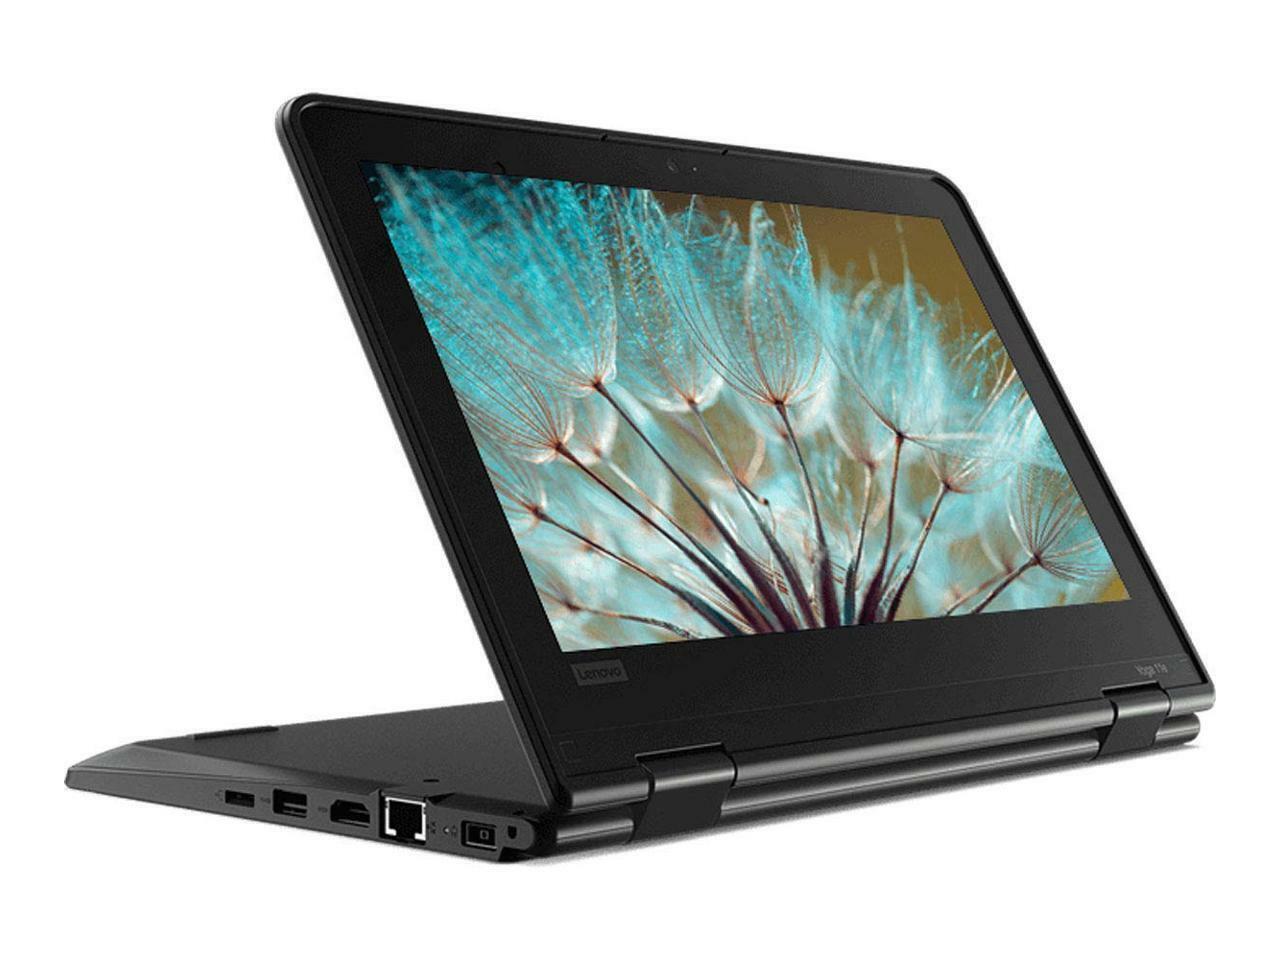 Lenovo Yoga Touchscreen Core i5 Laptop Windows 10 4GB 128GB SSD HDMI Warranty